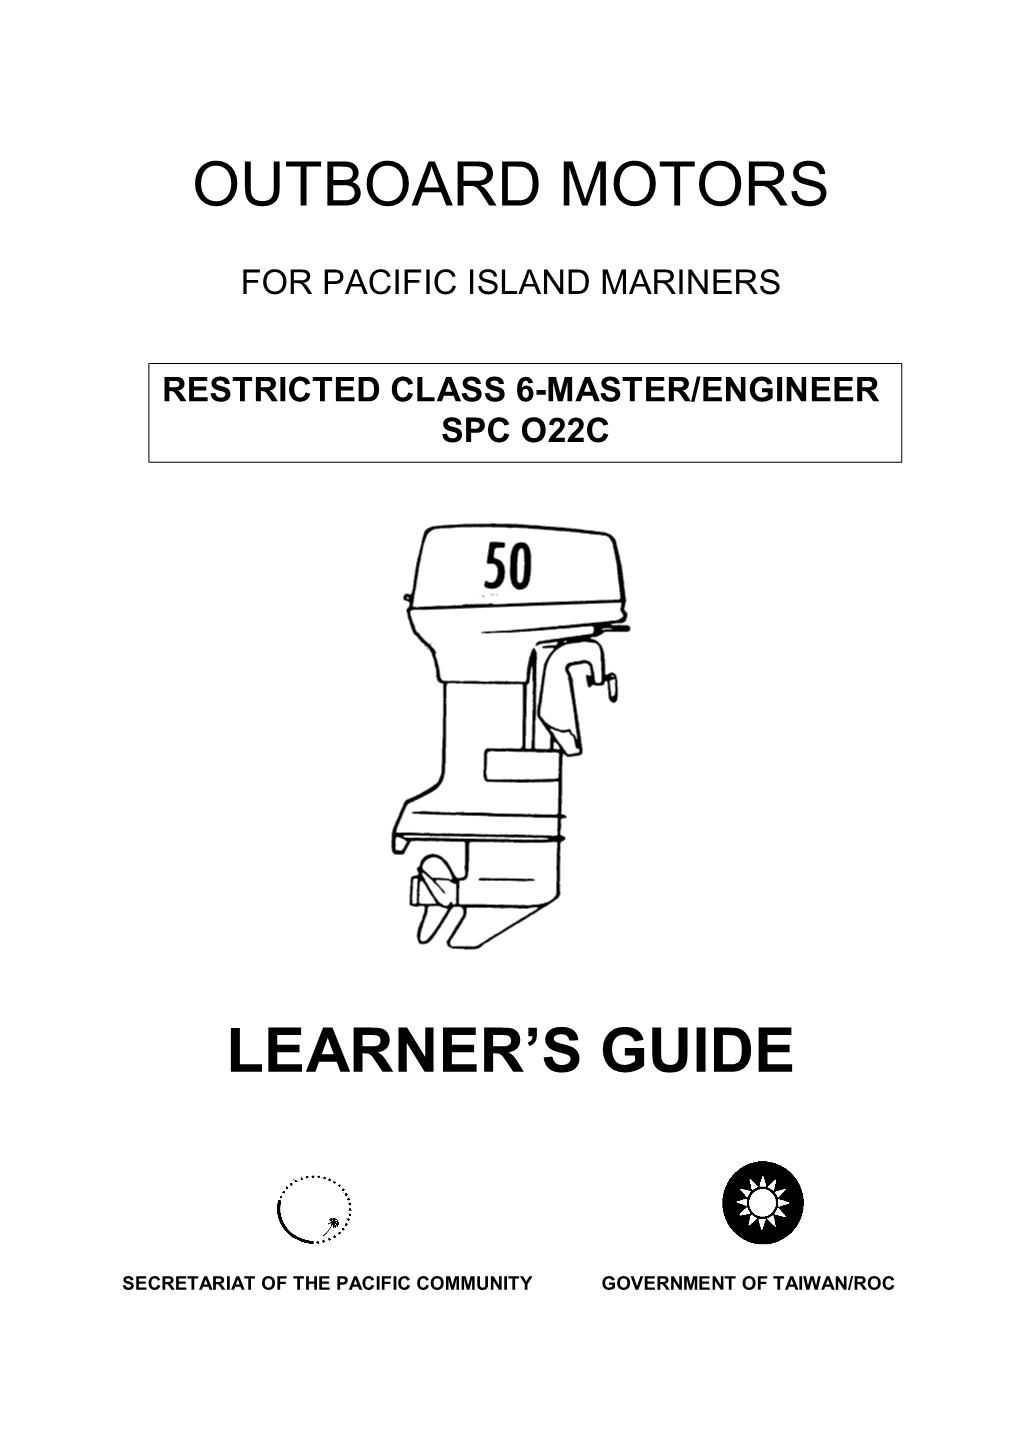 Outboard Motors Learner's Guide